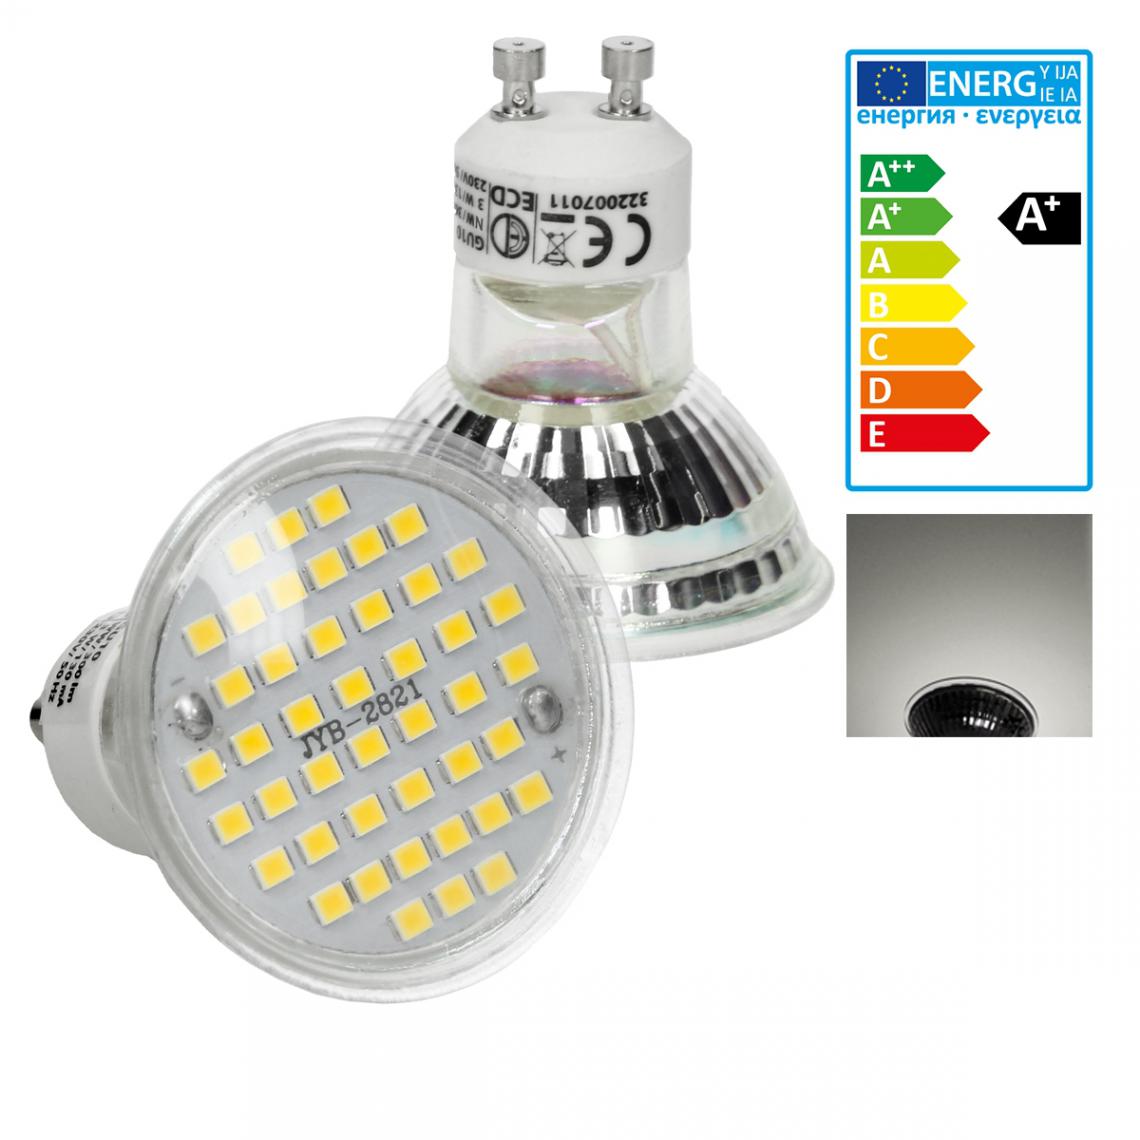 Ecd Germany - Lampe LED GU10 44SMD Spot 3W en verre 251 Lm blanc neutre 4000K - Ampoules LED